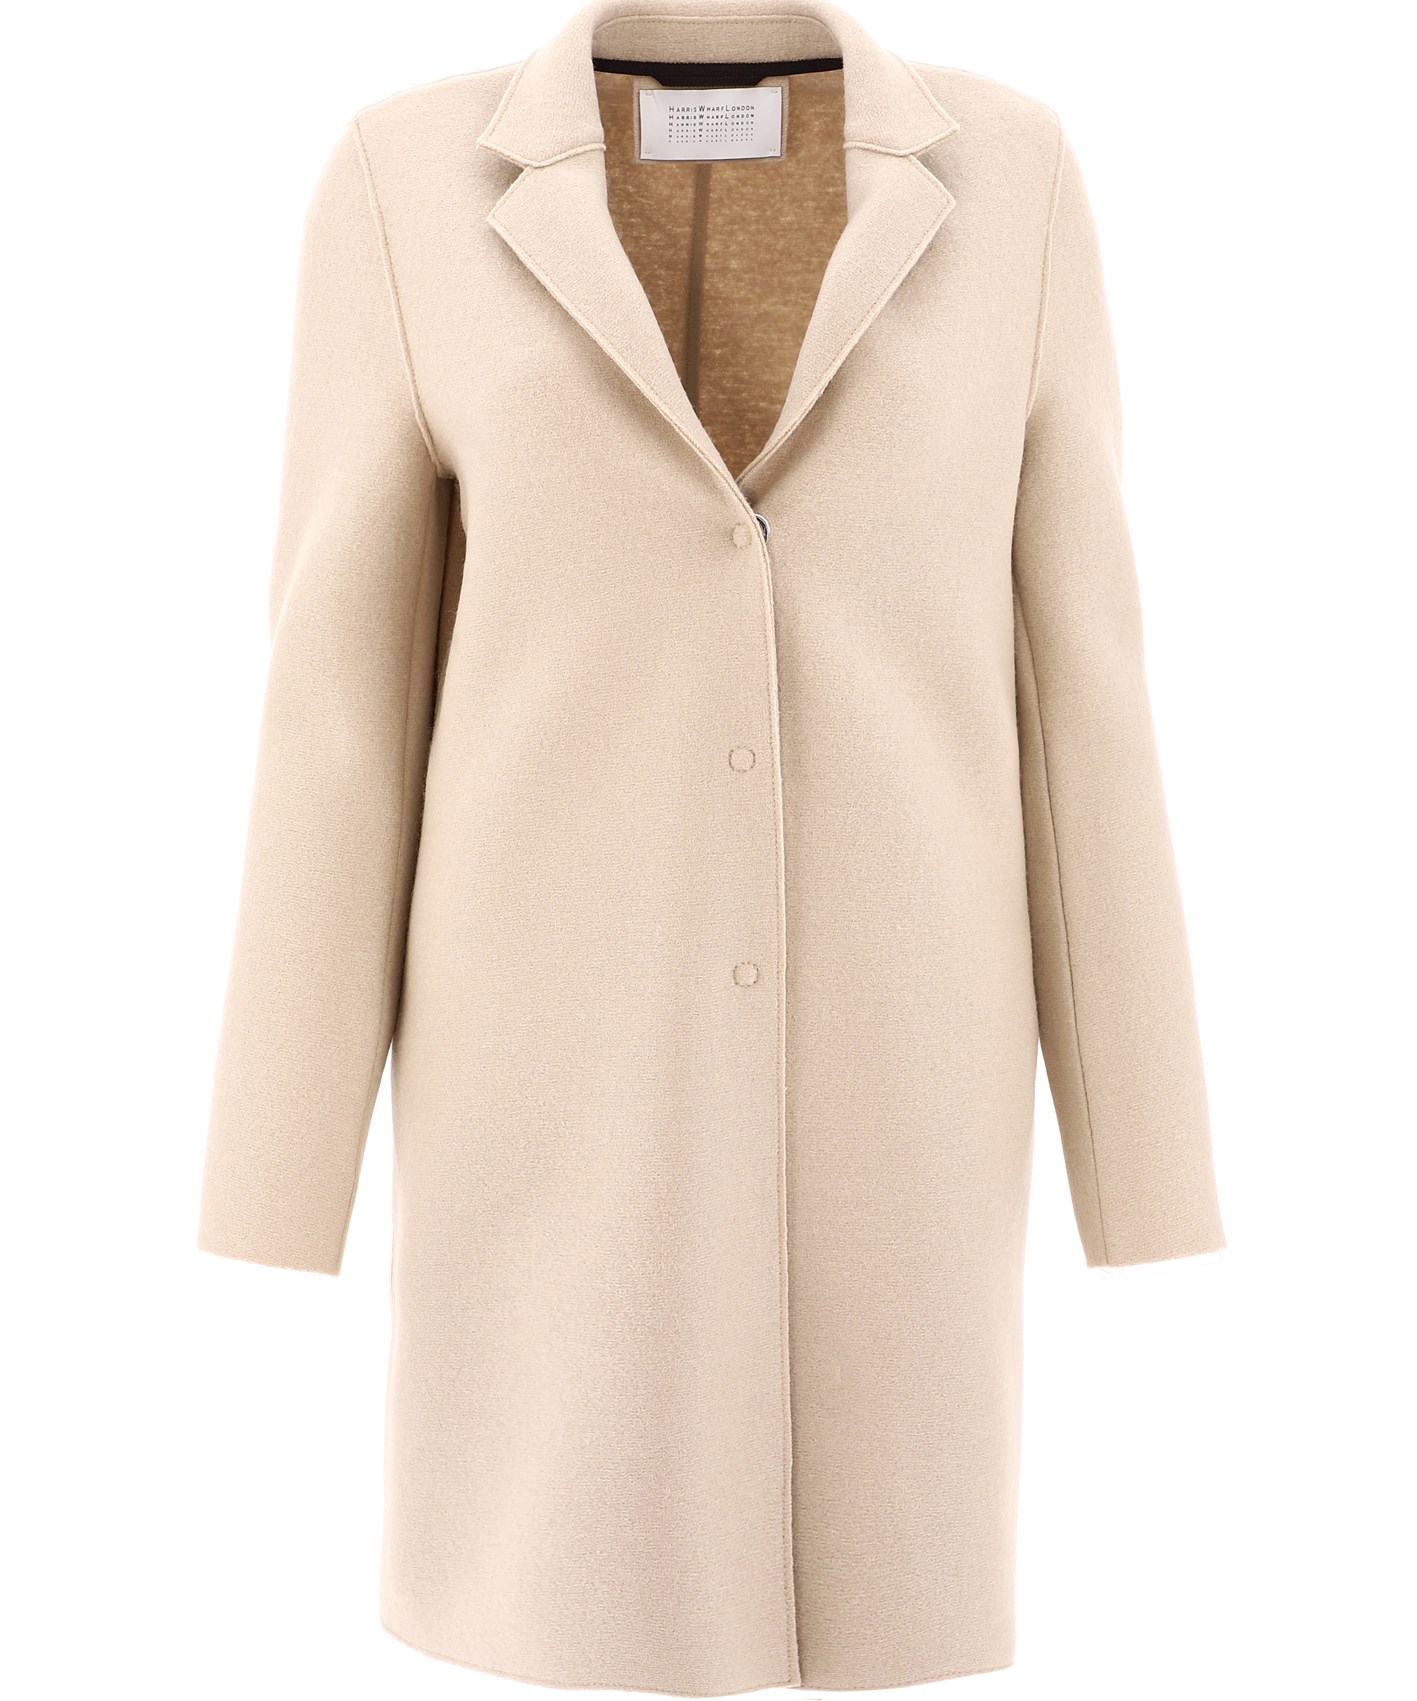 【Harris Wharf London】Cocoon wool coat